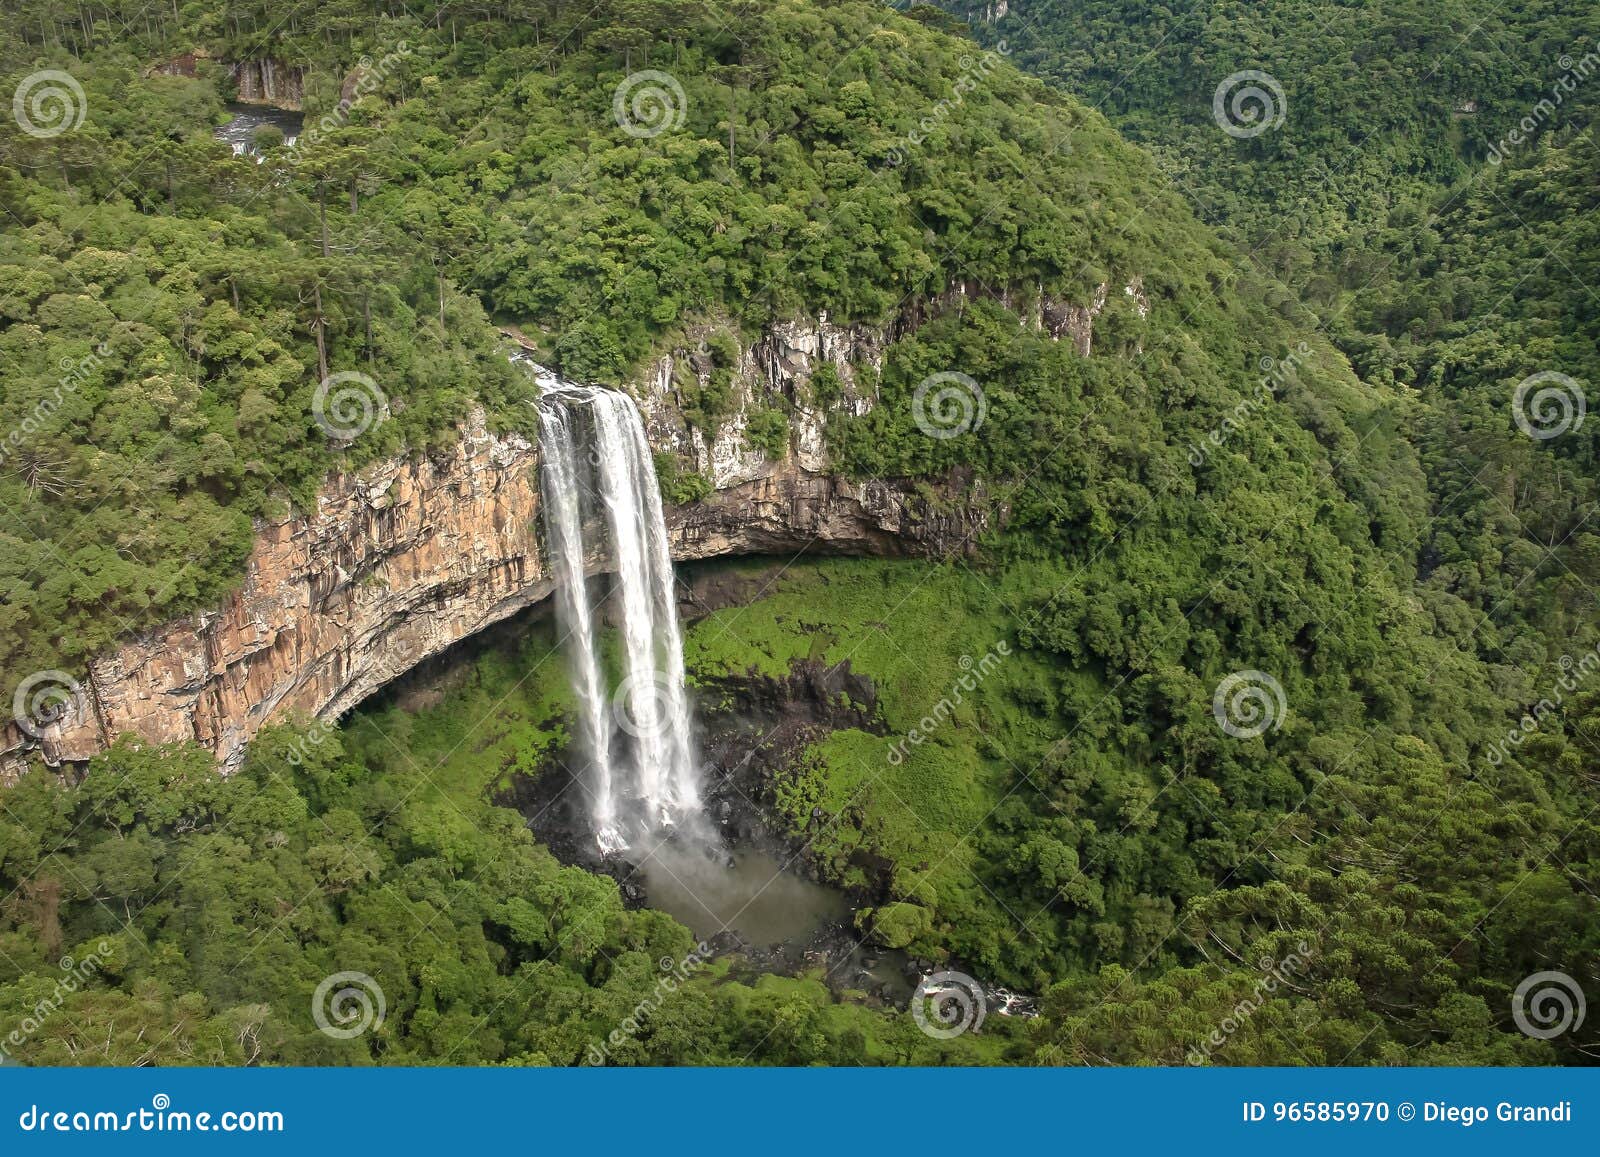 caracol waterfall - canela, rio grande do sul, brazil